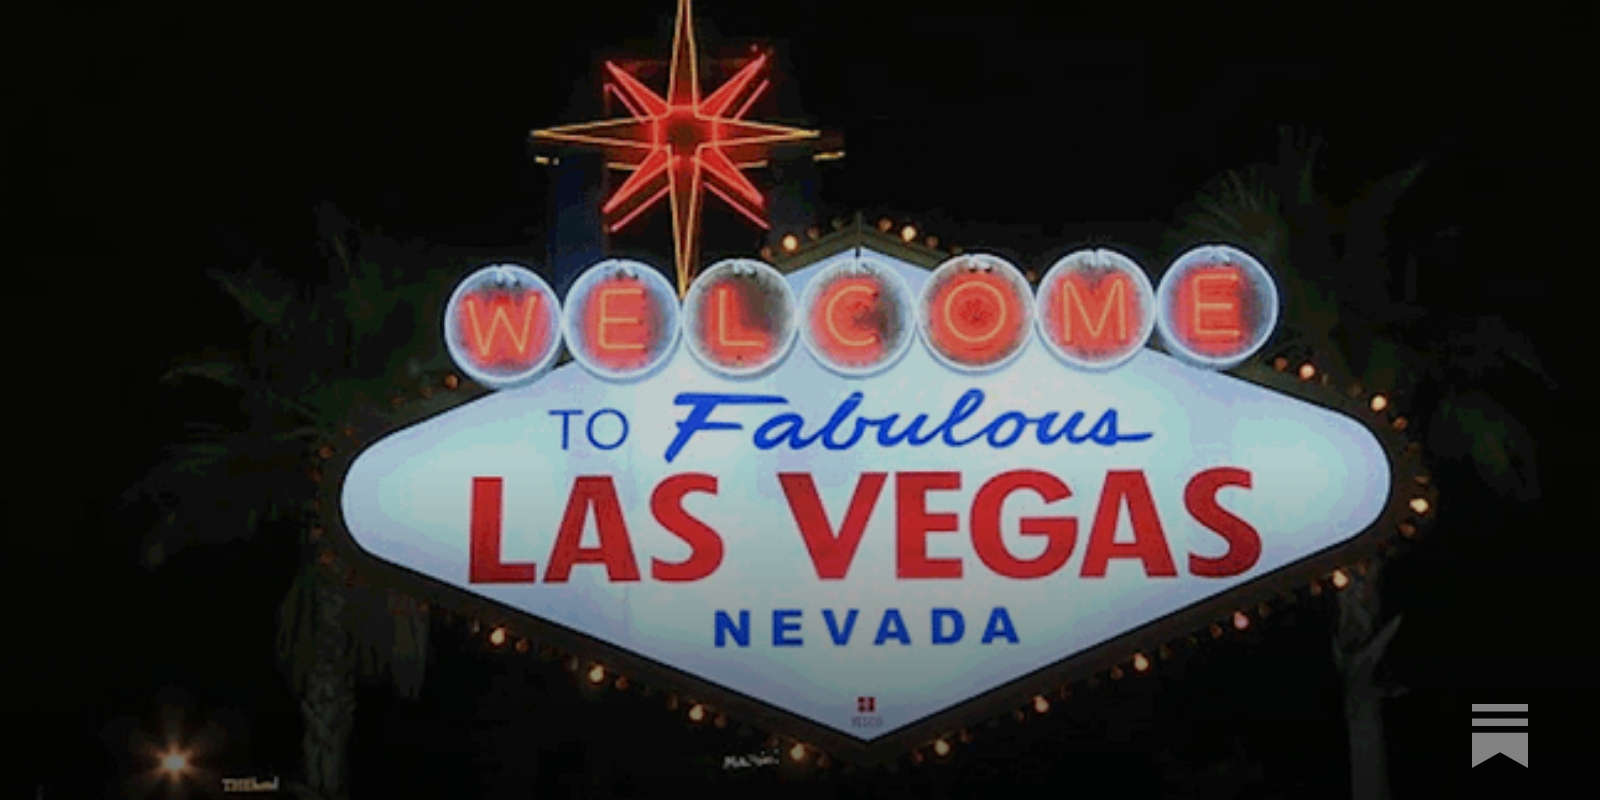 5 former thrills with a spot in Las Vegas history - Las Vegas Sun News